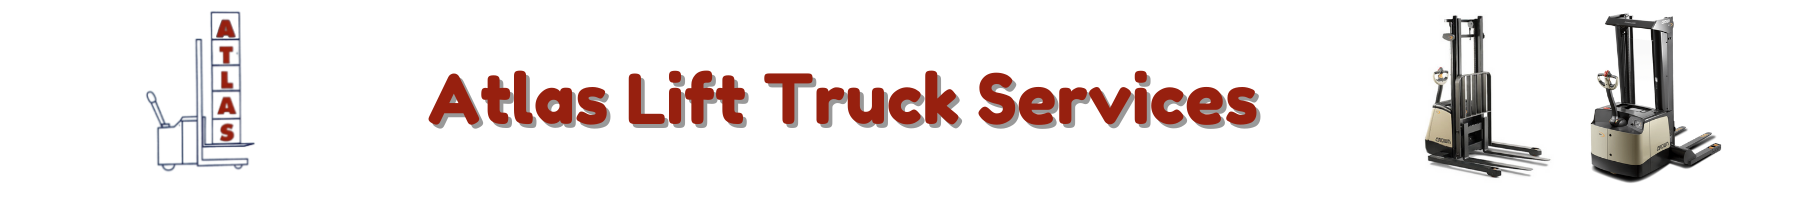 Atlas Lift Truck Services